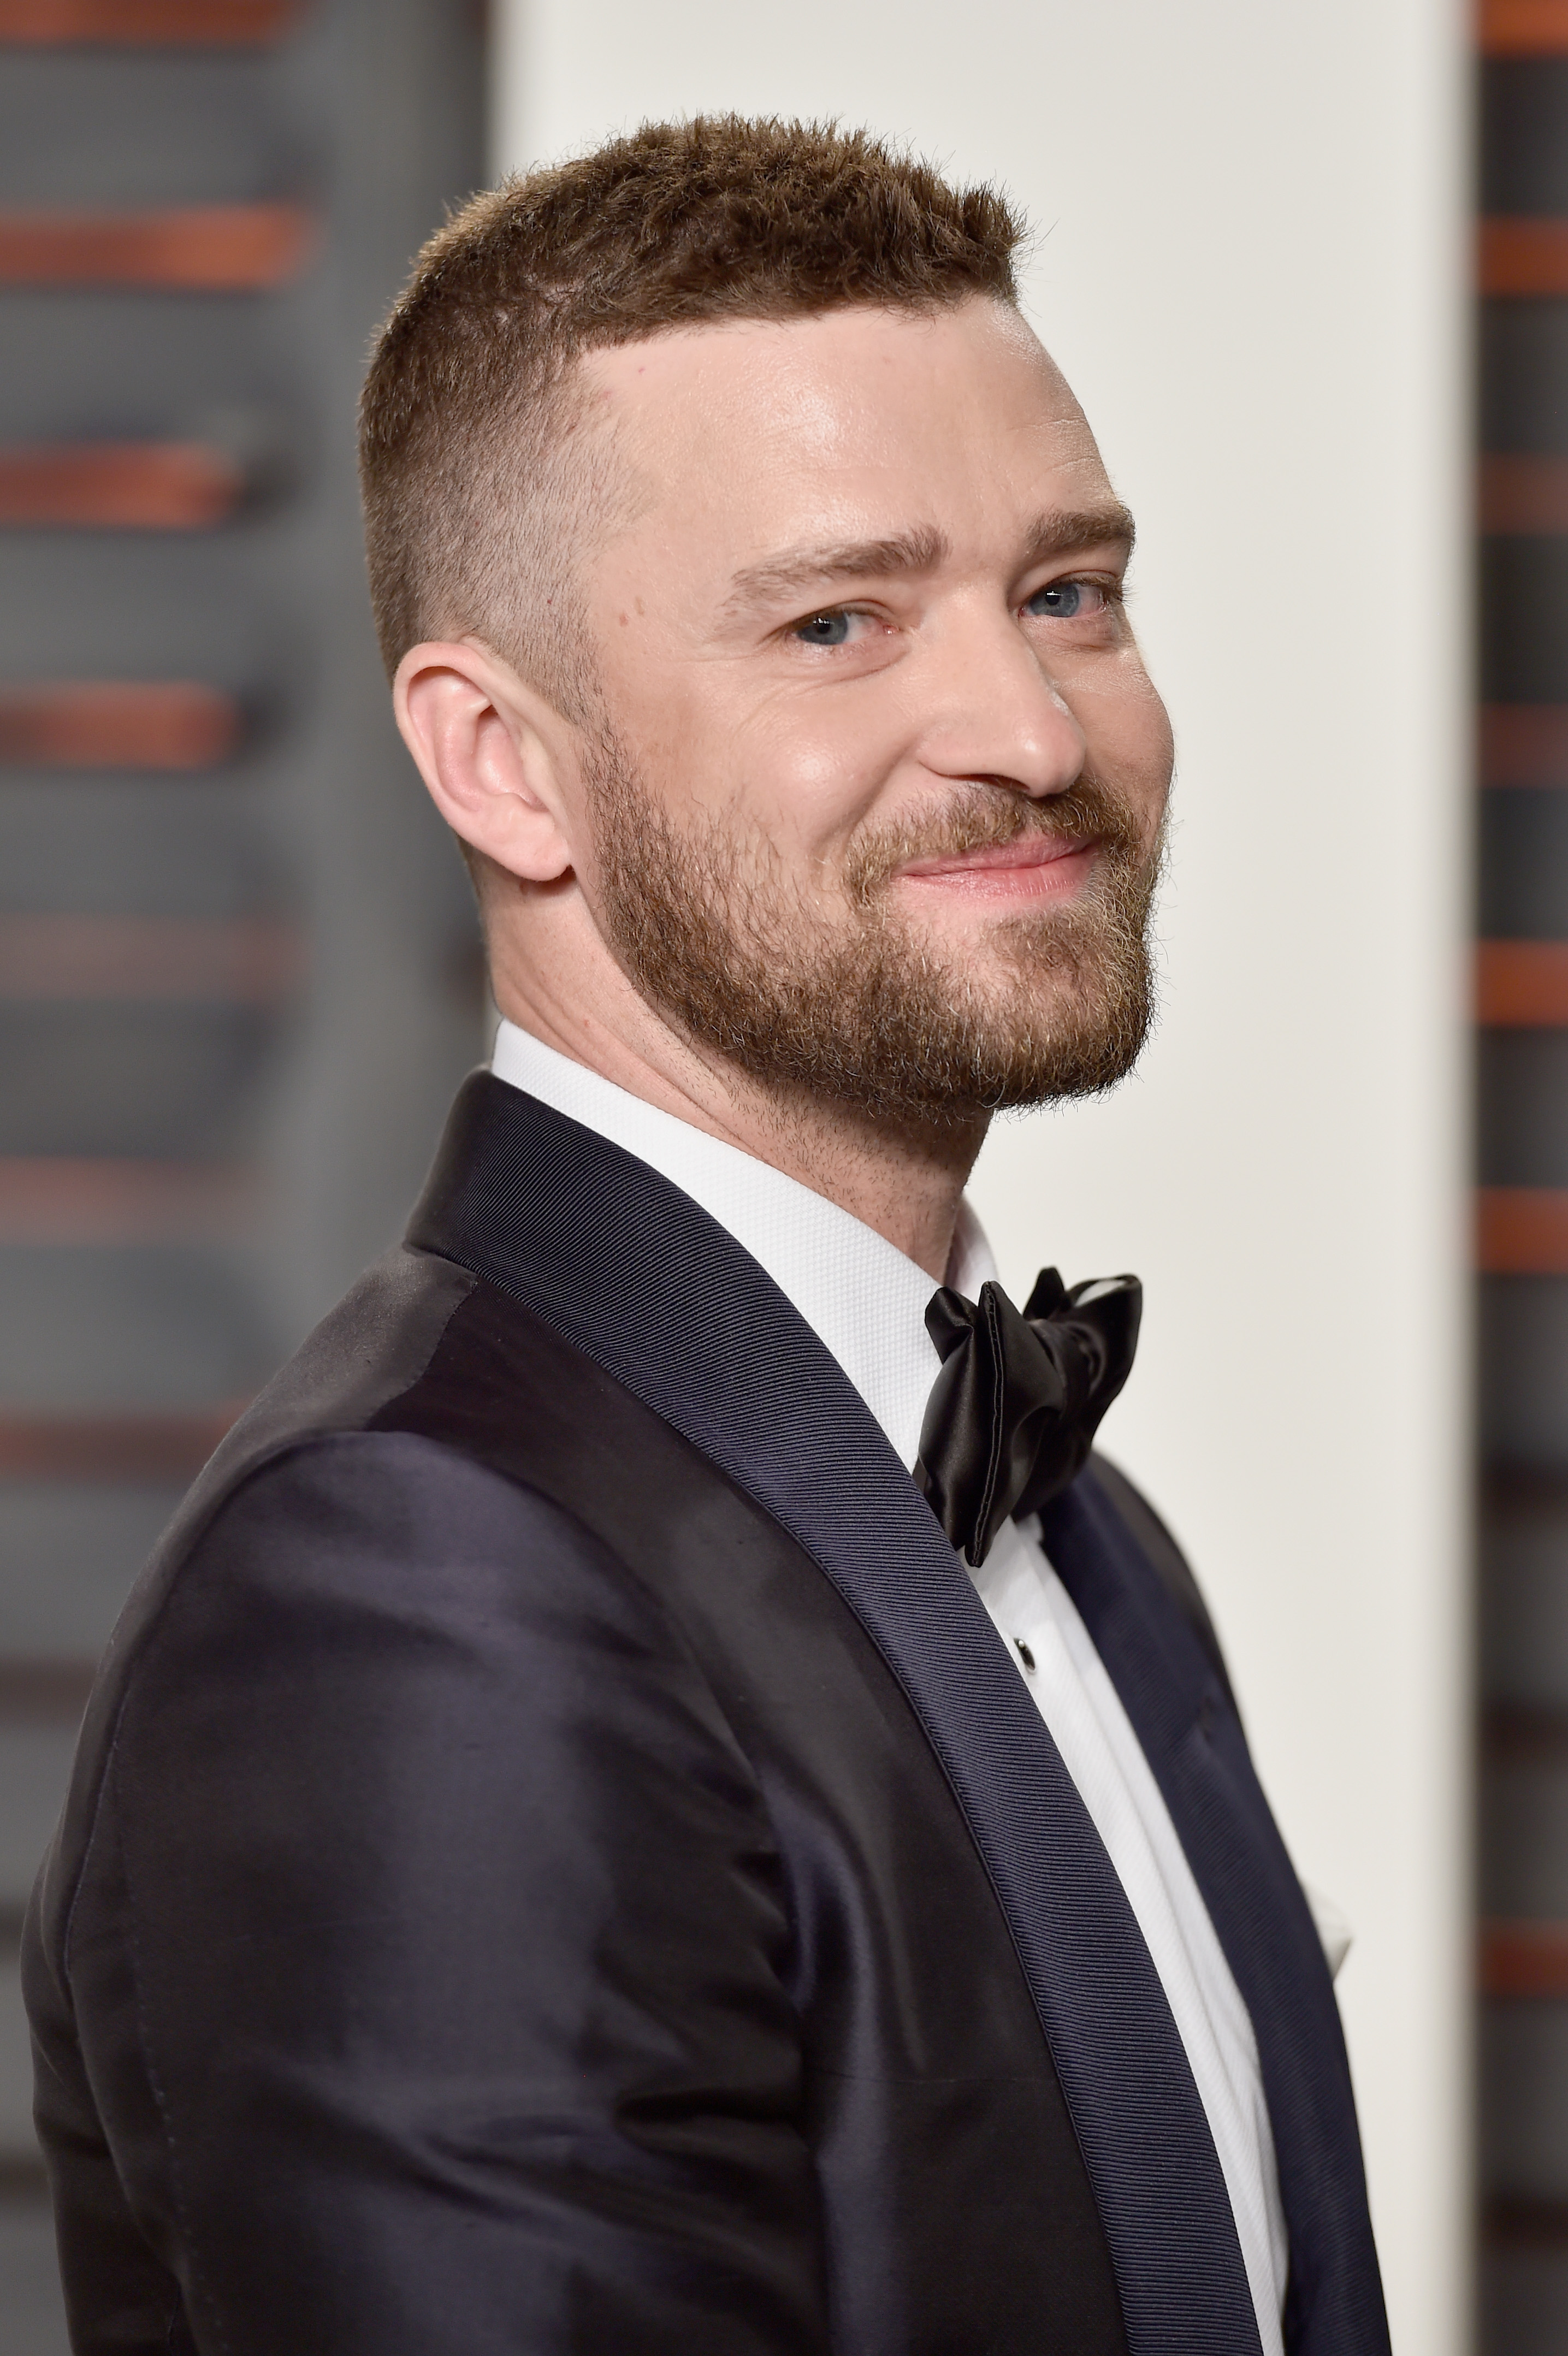 Justin Timberlake at the Trolls Australian Premiere in 